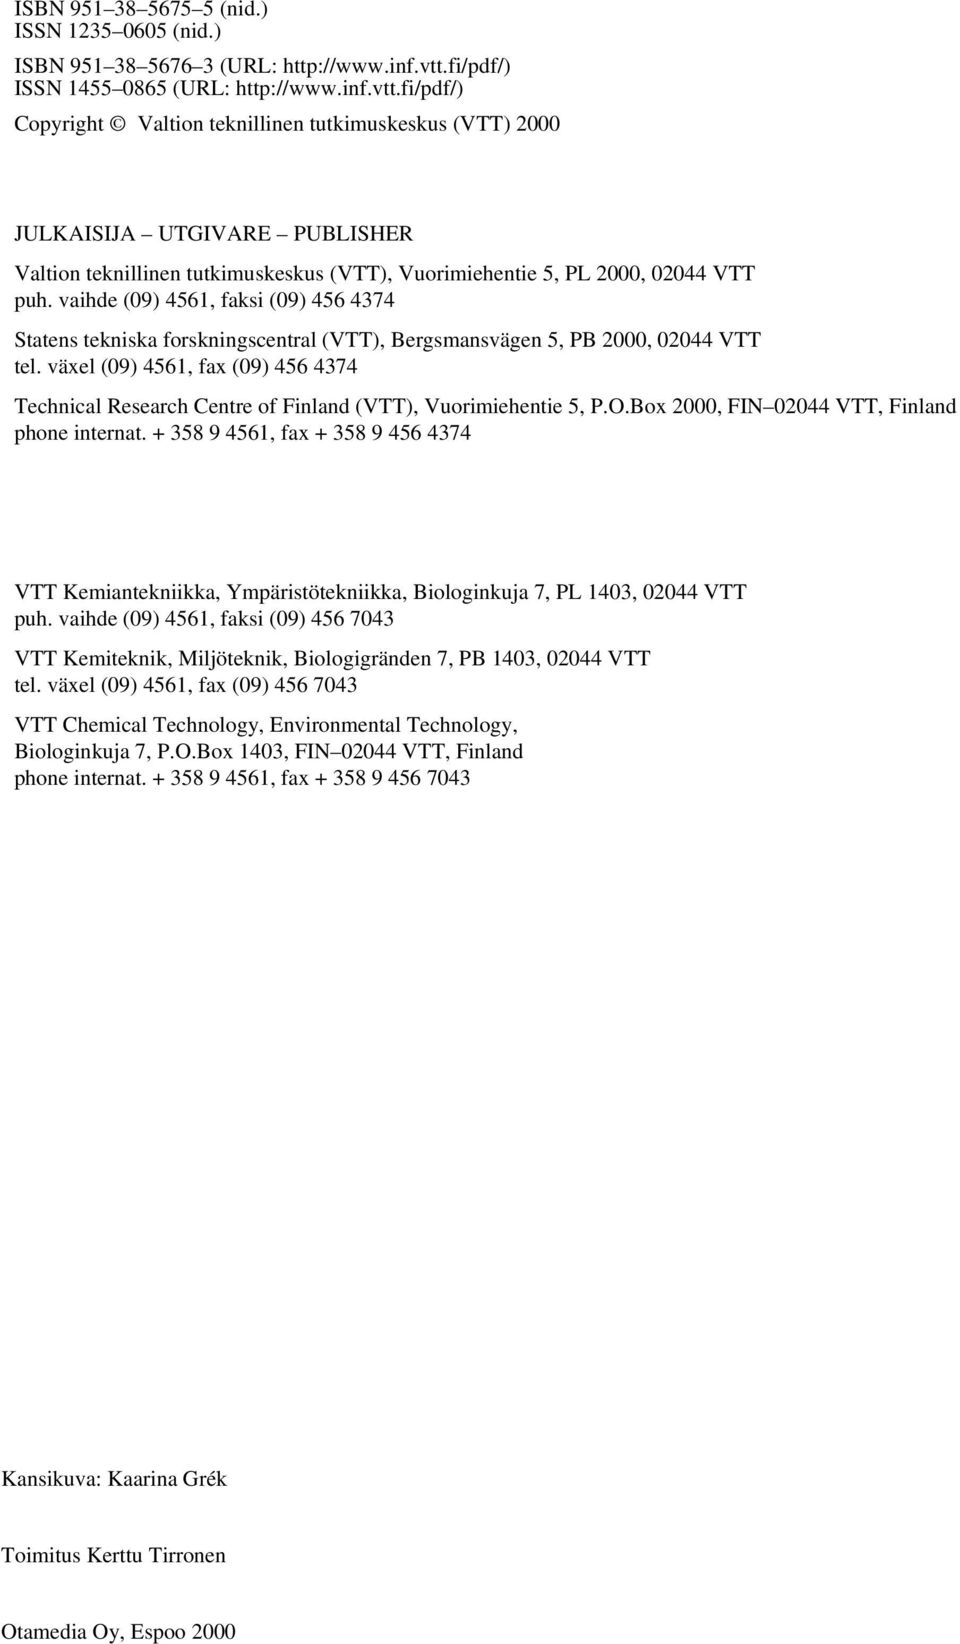 fi/pdf/) Copyright Valtion teknillinen tutkimuskeskus (VTT) 2000 JULKAISIJA UTGIVARE PUBLISHER Valtion teknillinen tutkimuskeskus (VTT), Vuorimiehentie 5, PL 2000, 02044 VTT puh.